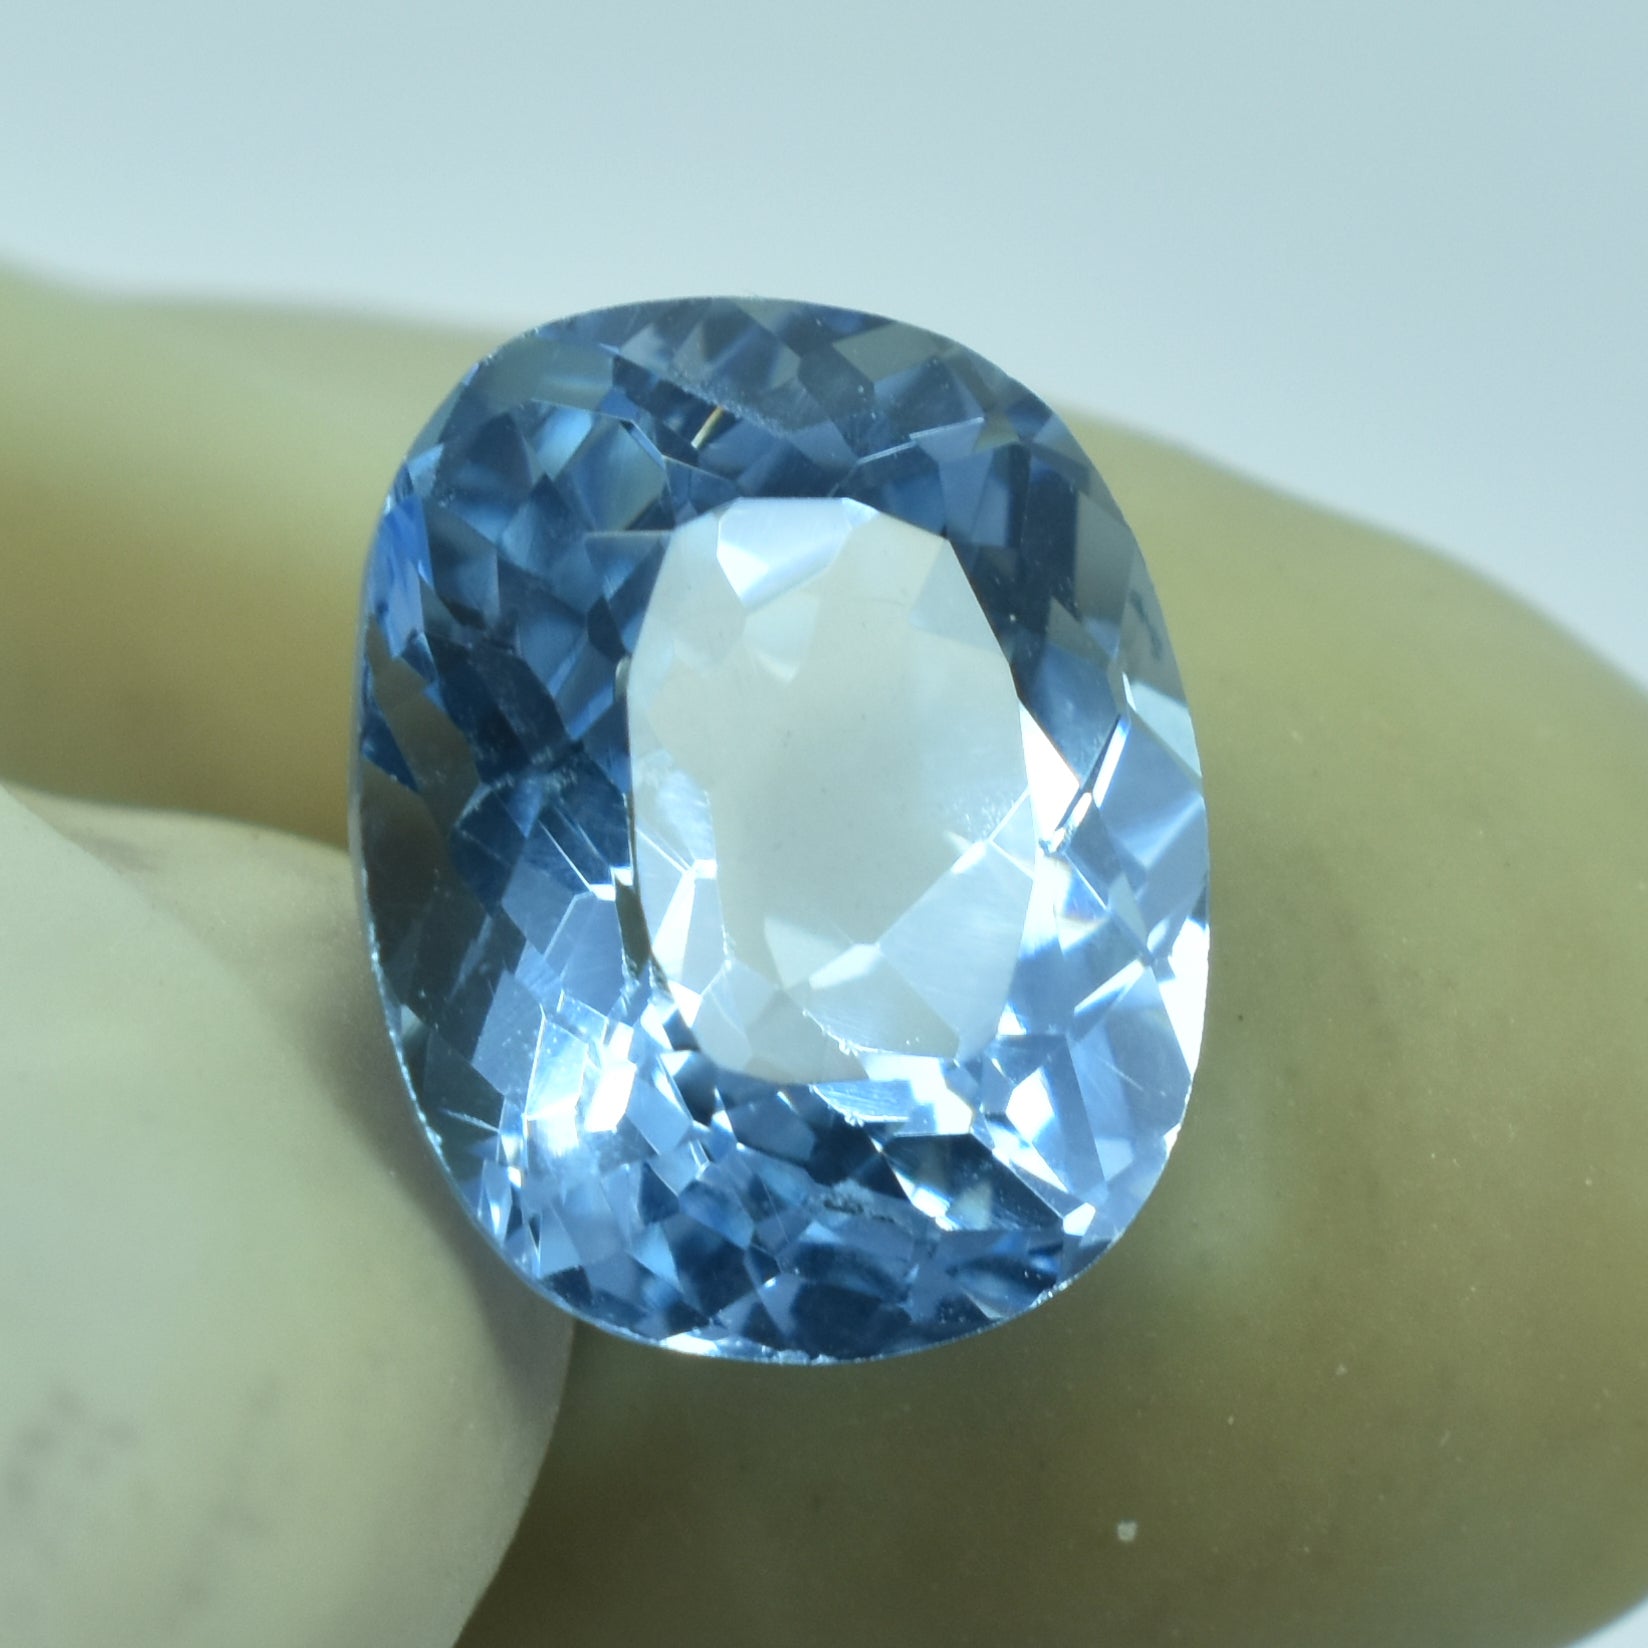 Beautiful Sapphire Gem 4.35 Carat Blue Sapphire Cushion Cut Certified Natural Loose Gemstone